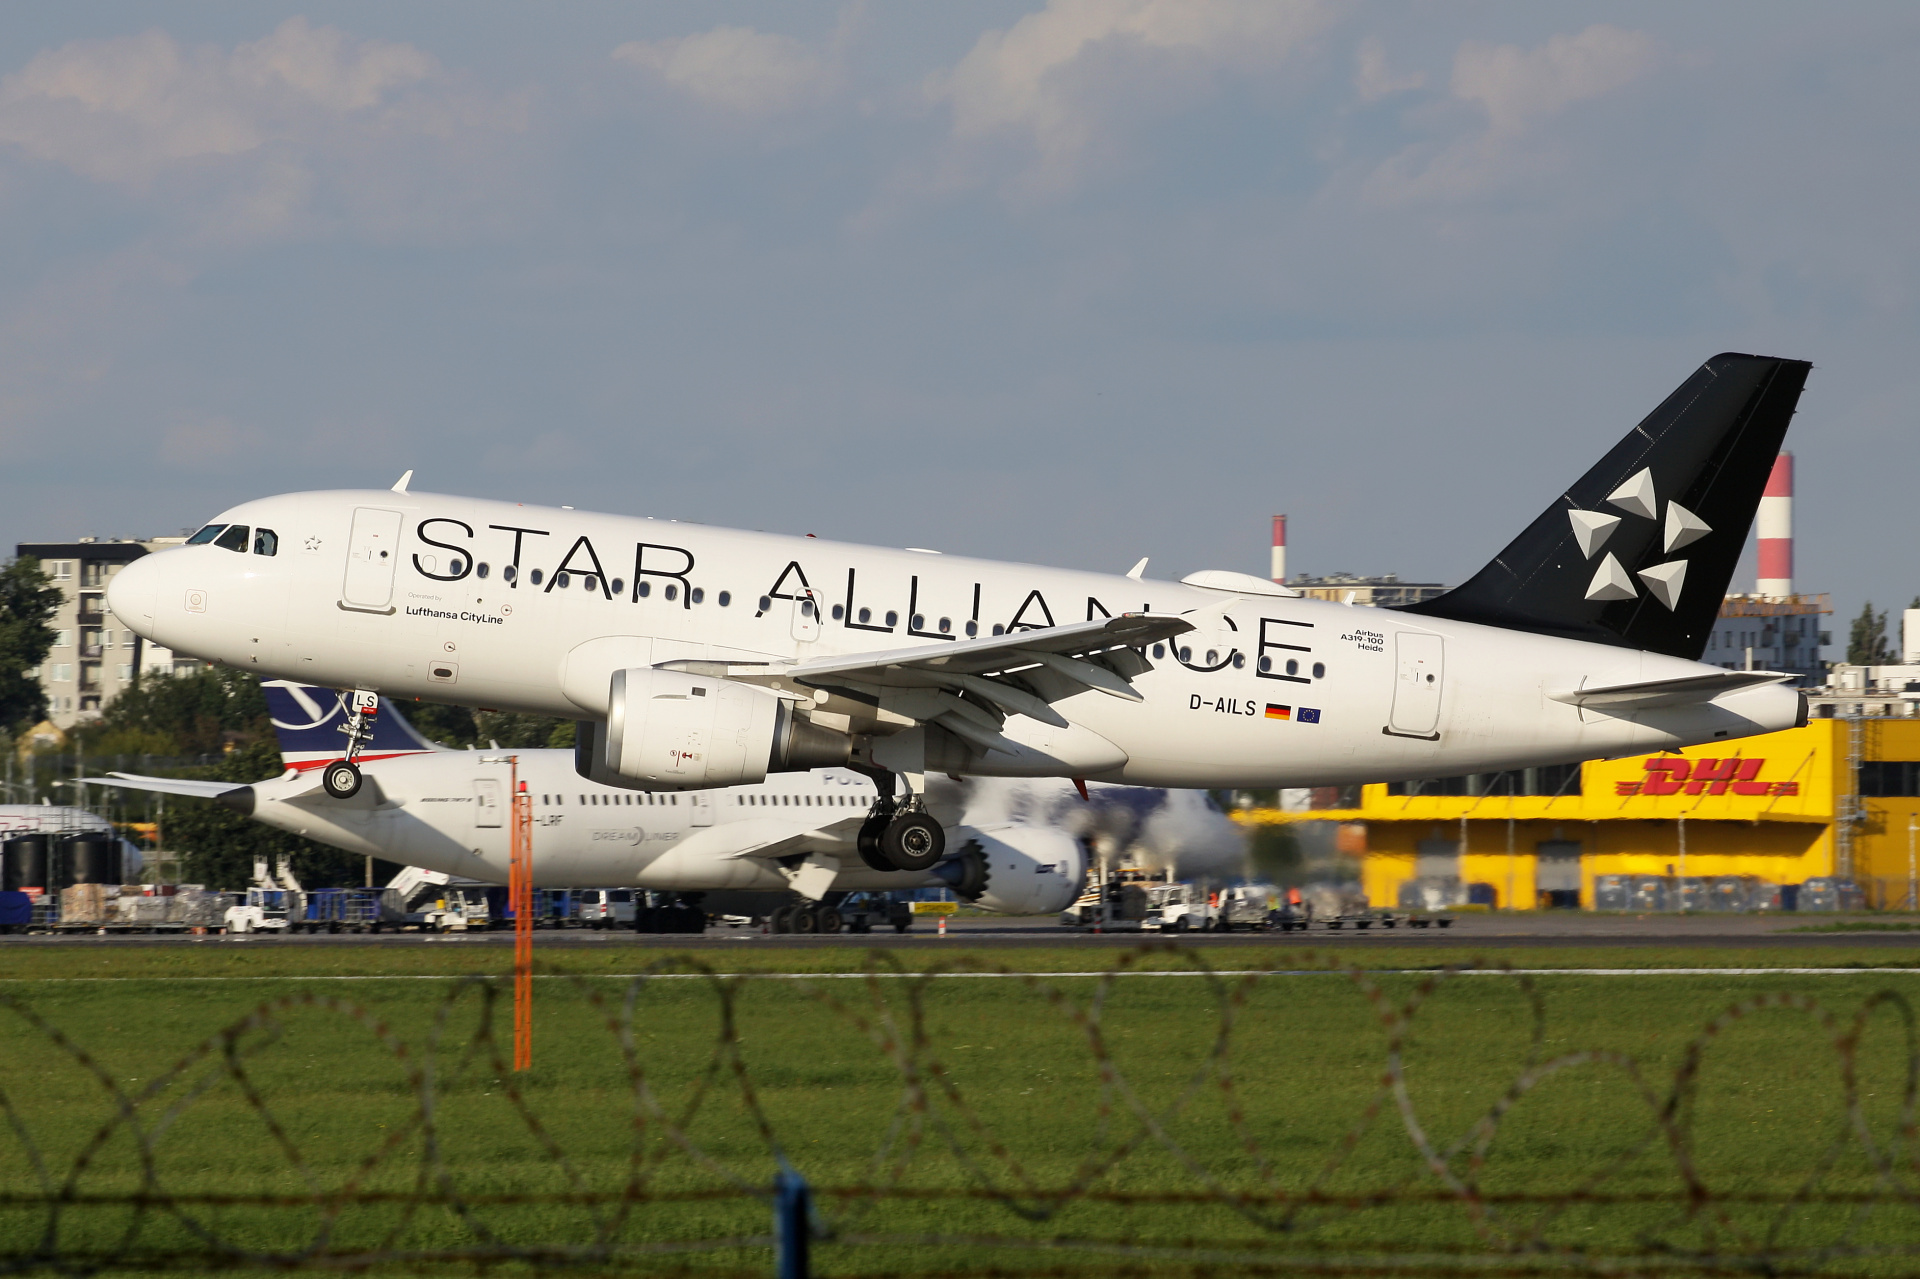 D-AILS, Lufthansa CityLine (Star Alliance livery) (Aircraft » EPWA Spotting » Airbus A319-100 » Lufthansa)